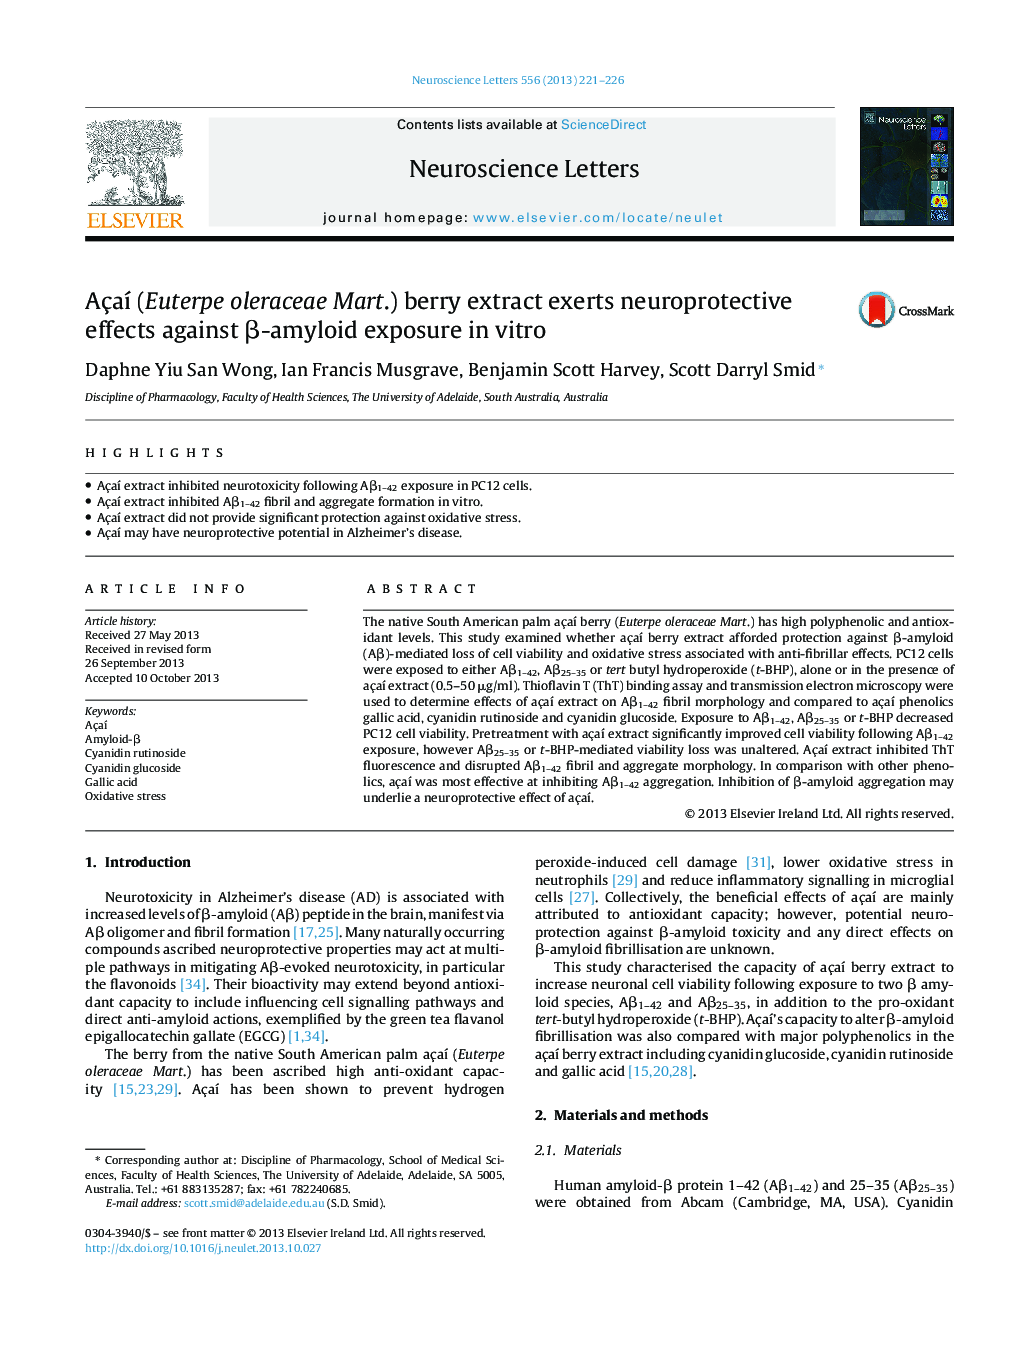 AçaÃ­ (Euterpe oleraceae Mart.) berry extract exerts neuroprotective effects against Î²-amyloid exposure in vitro